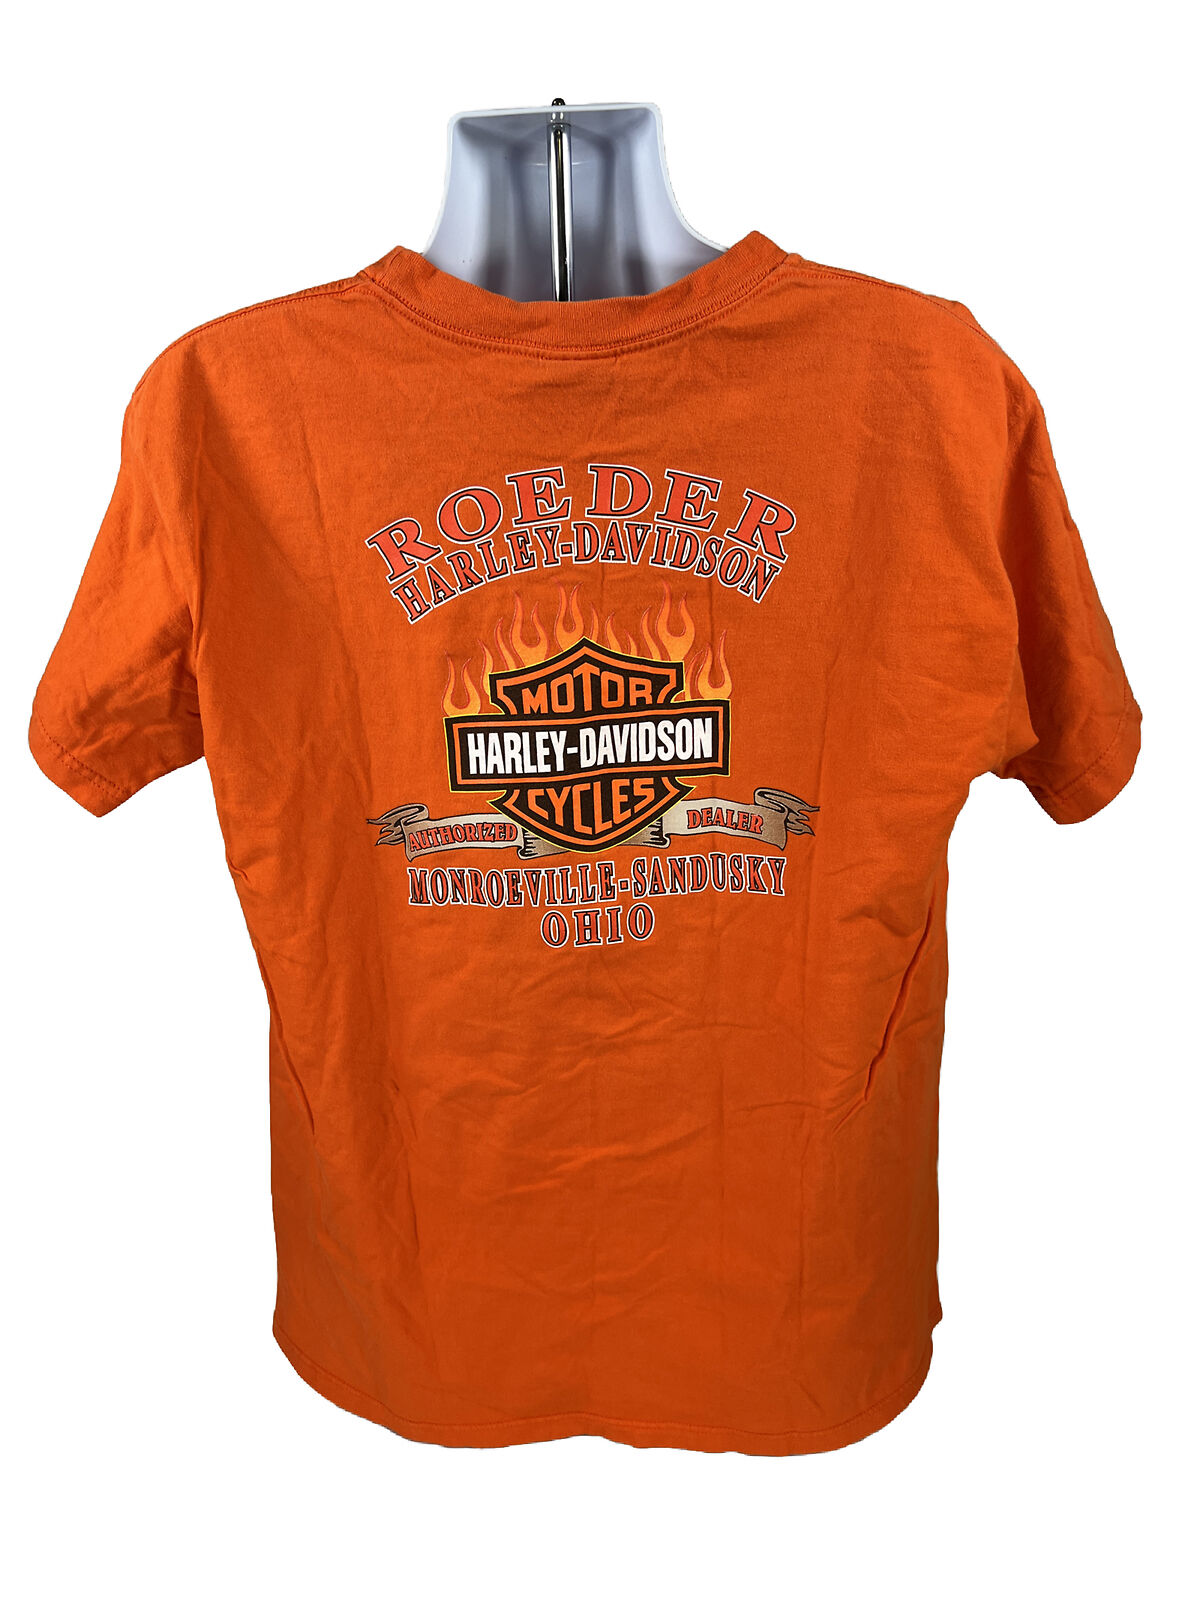 Harley Davidson Men's Orange Spark Plug Graphic Short Sleeve T-Shirt - XL